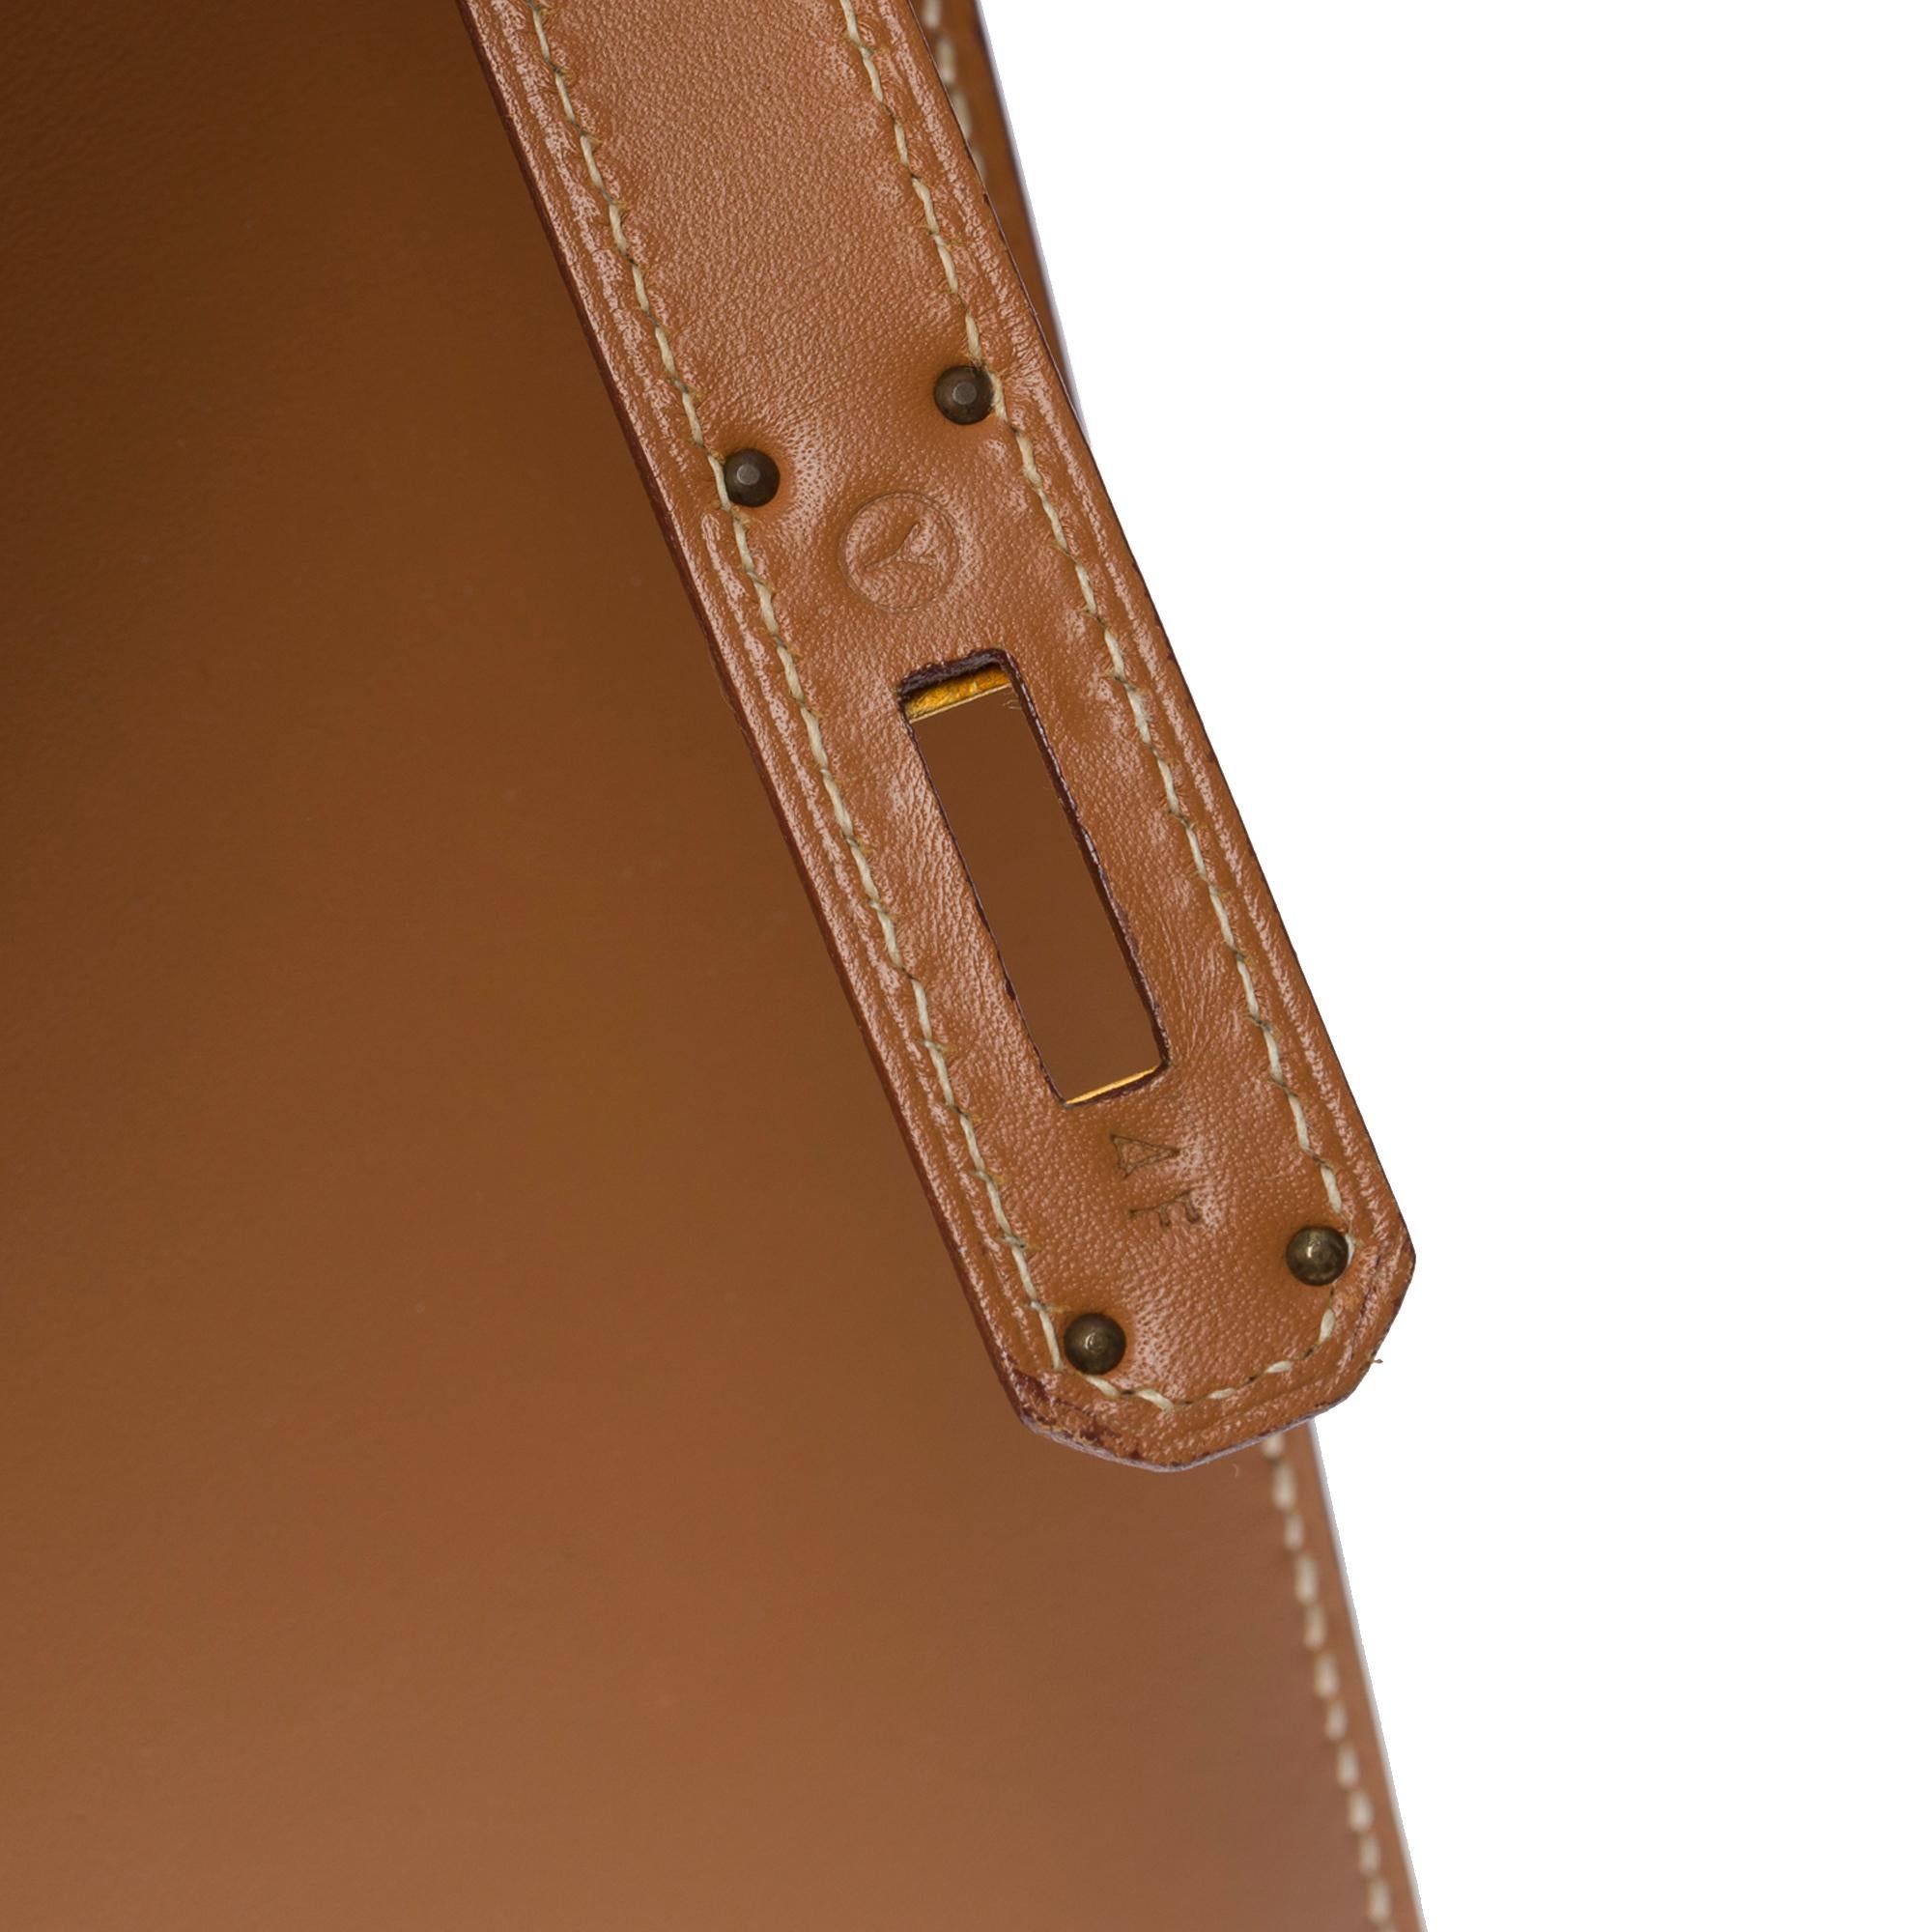 Very Rare Hermès Kelly 32 sellier handbag strap in Gold Chamonix leather , GHW 3